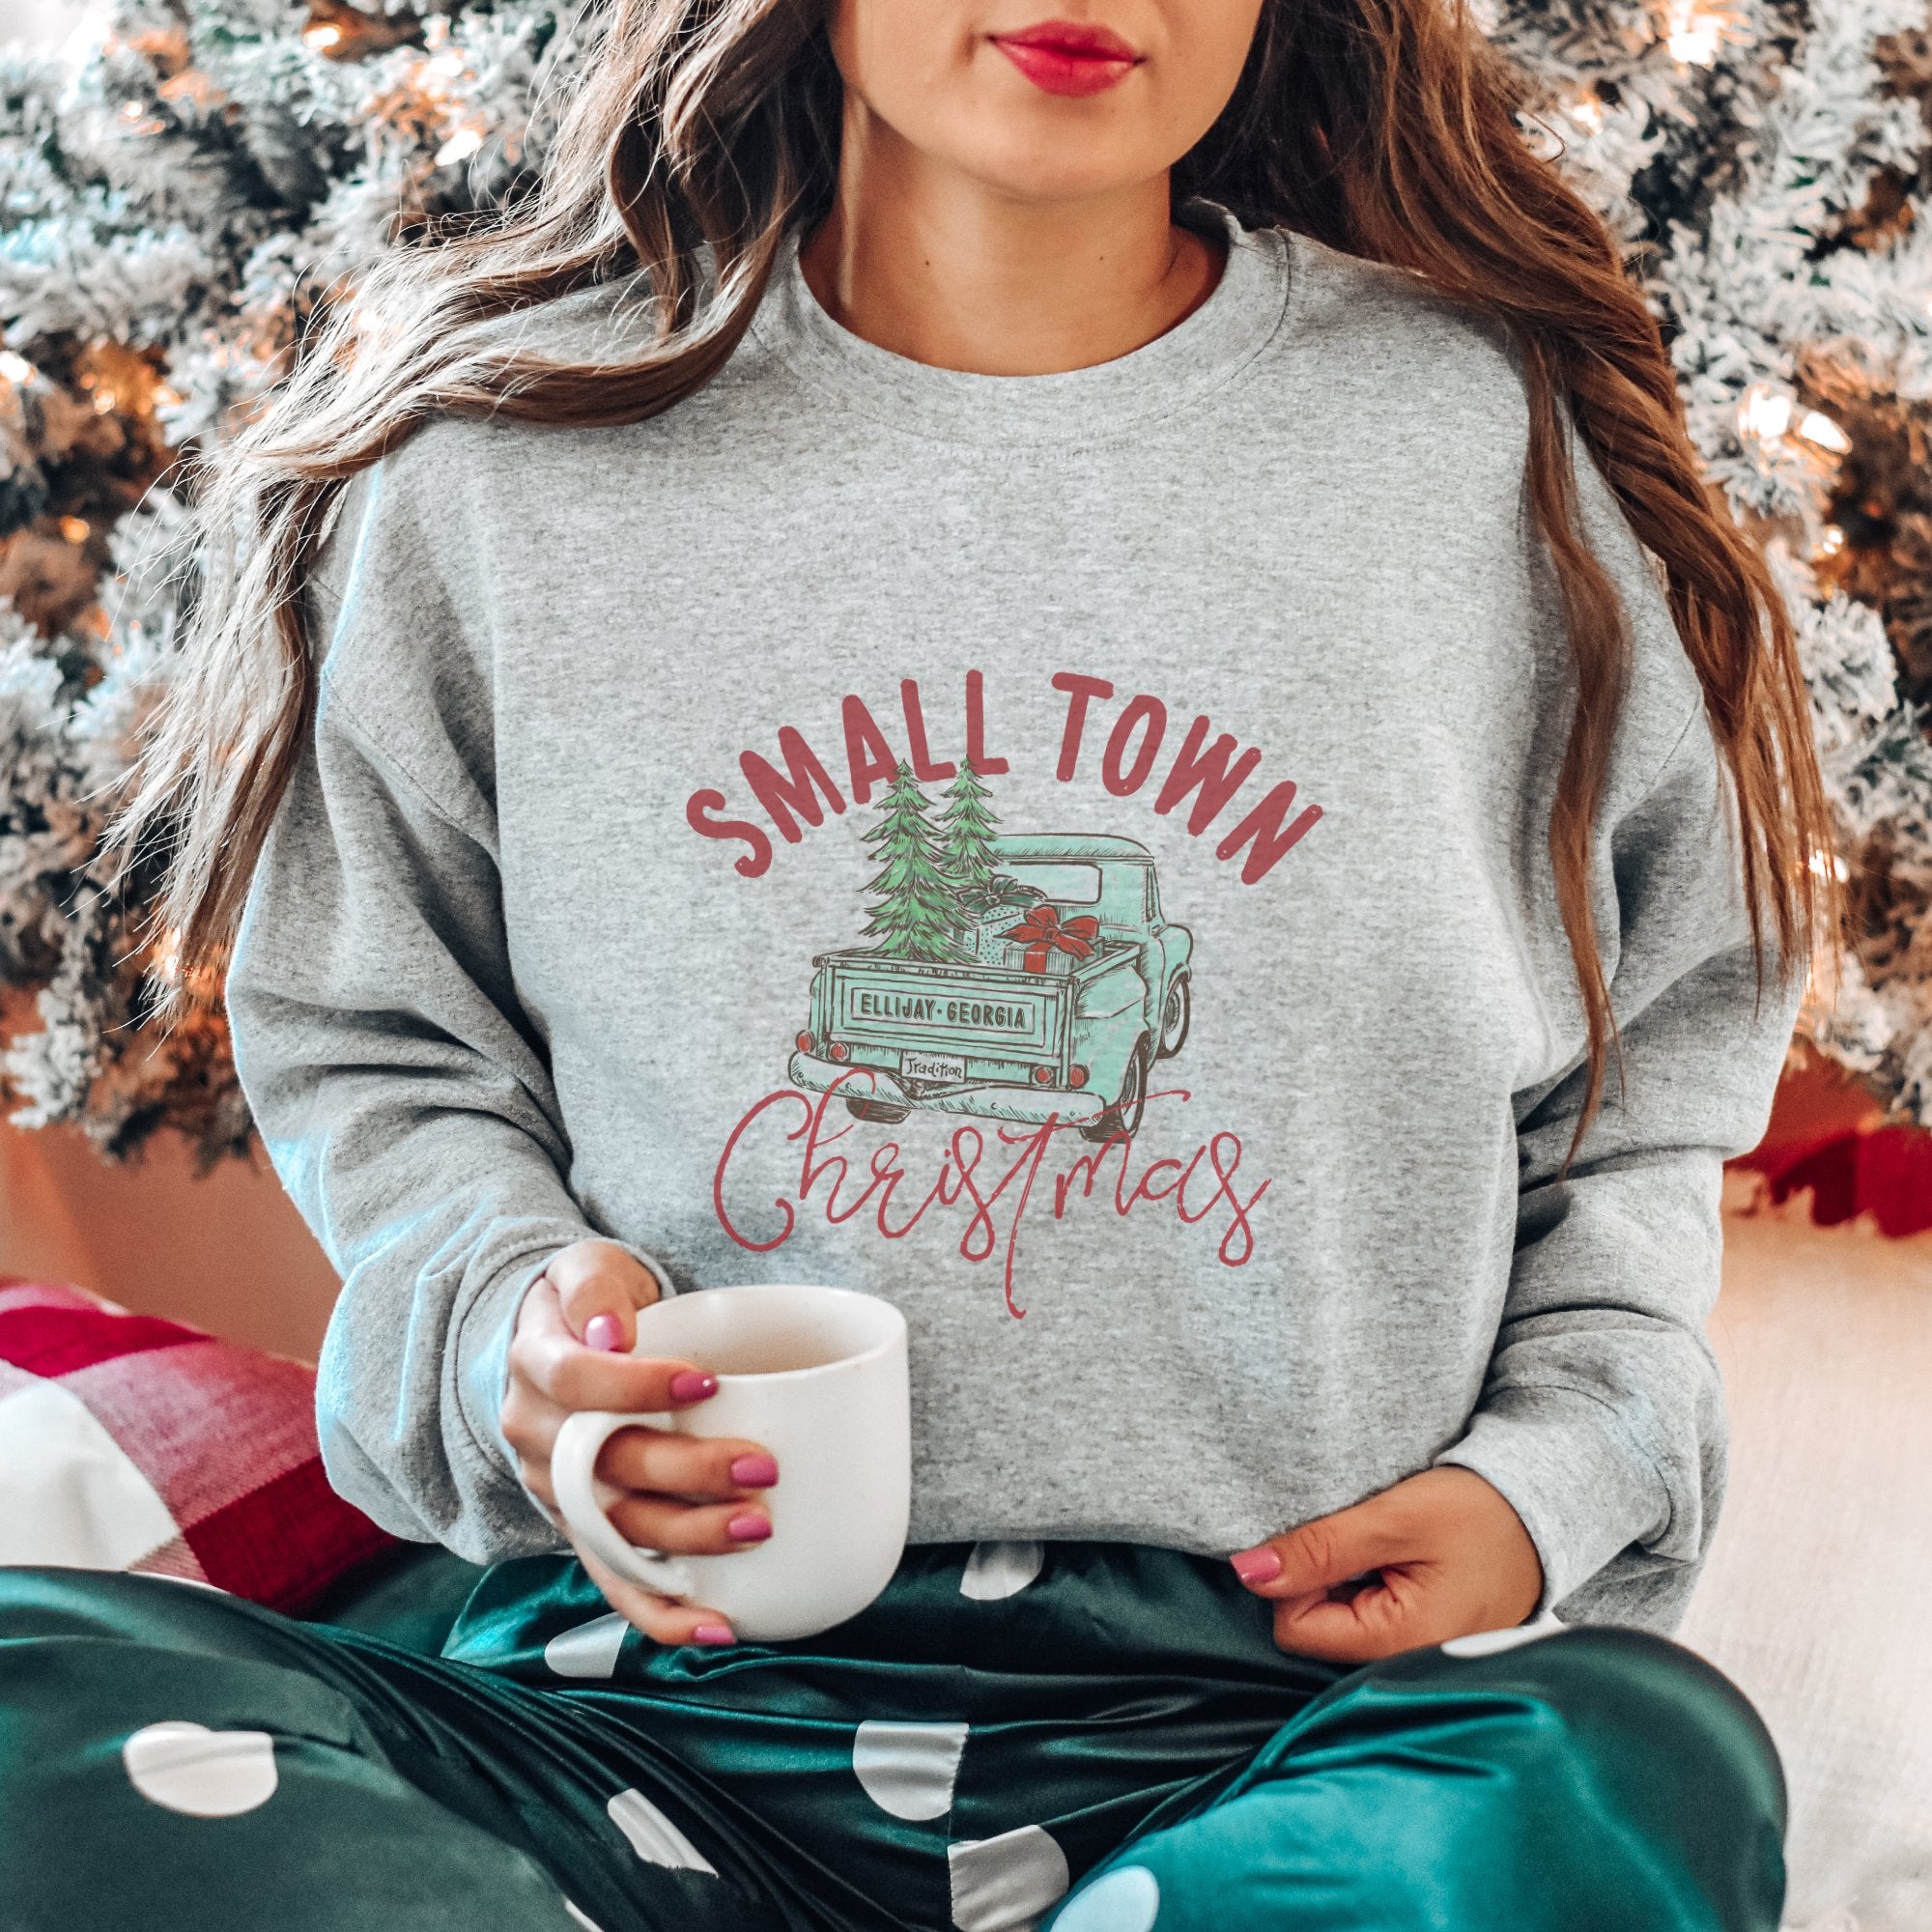 Small Town Christmas Sweatshirt - Trendznmore